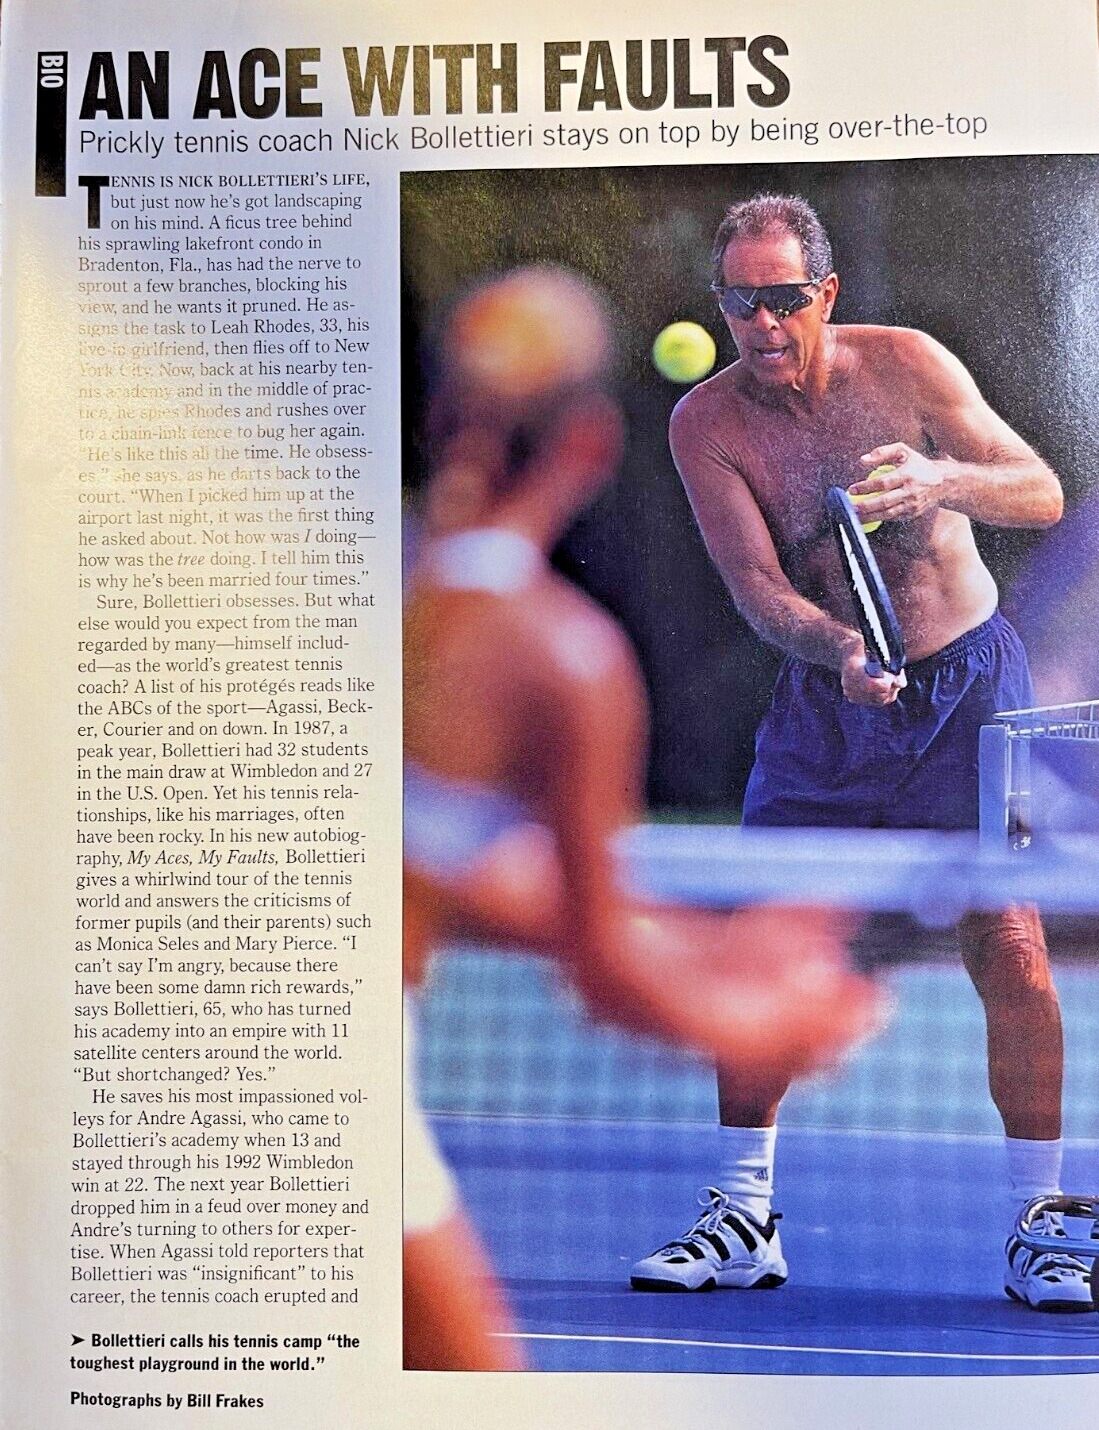 1996 Nick Bollettieri Tennis Coach